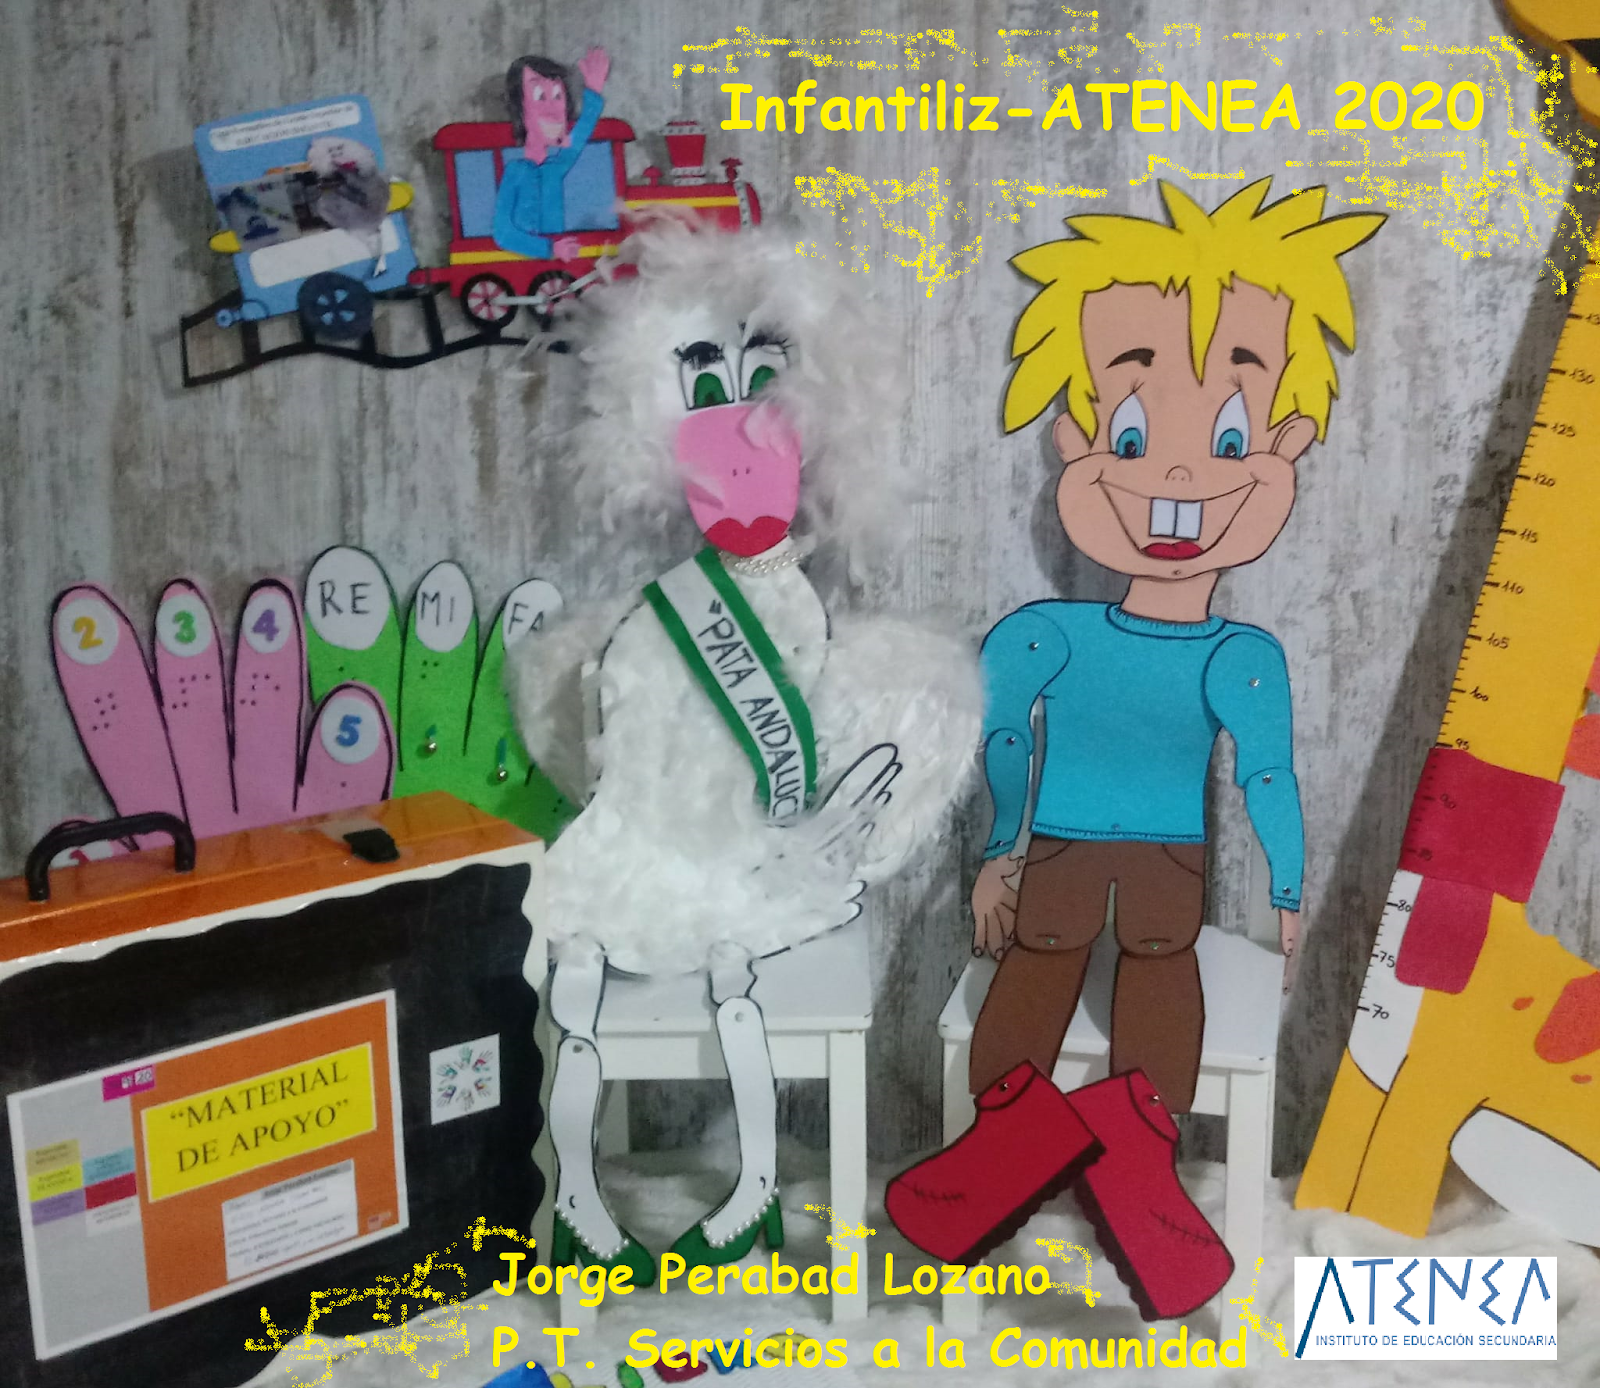 Infantiliz-ATENEA 2020